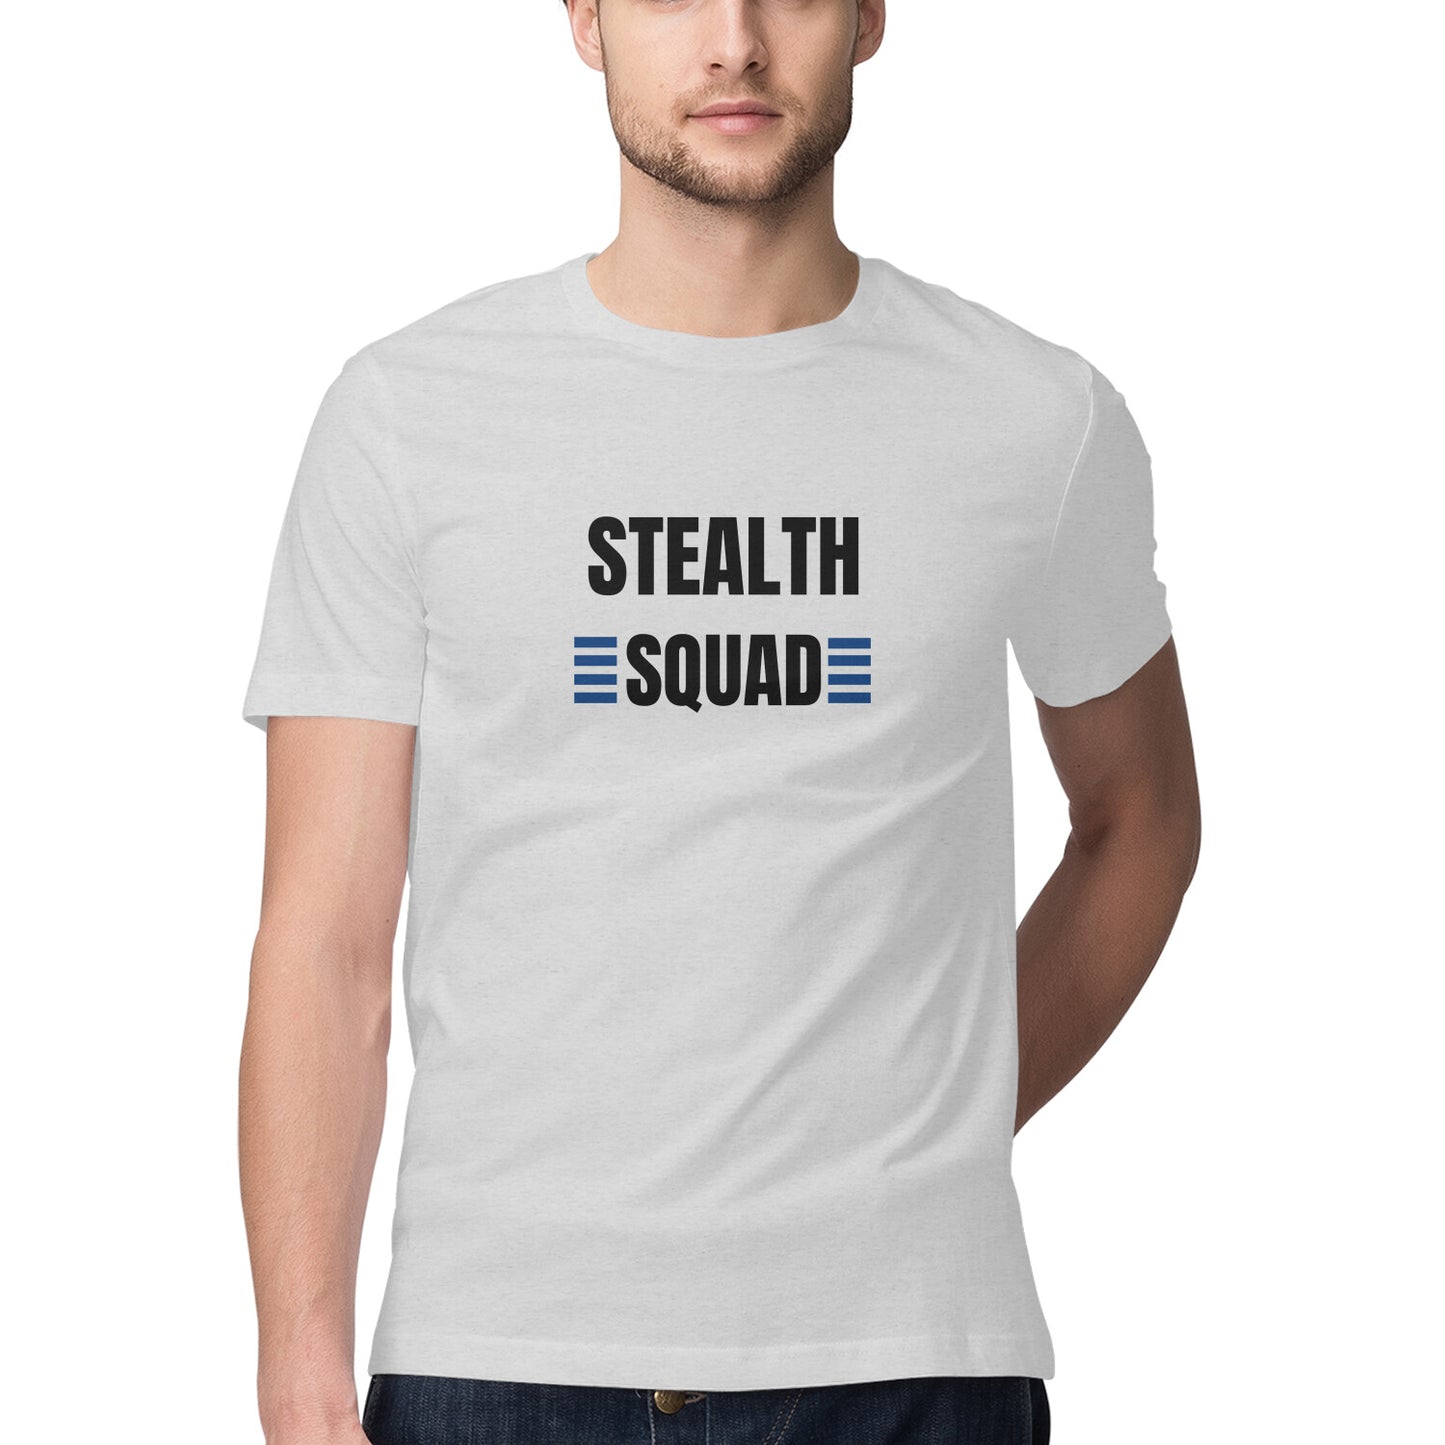 Stealth squad' Men's tee in dark font